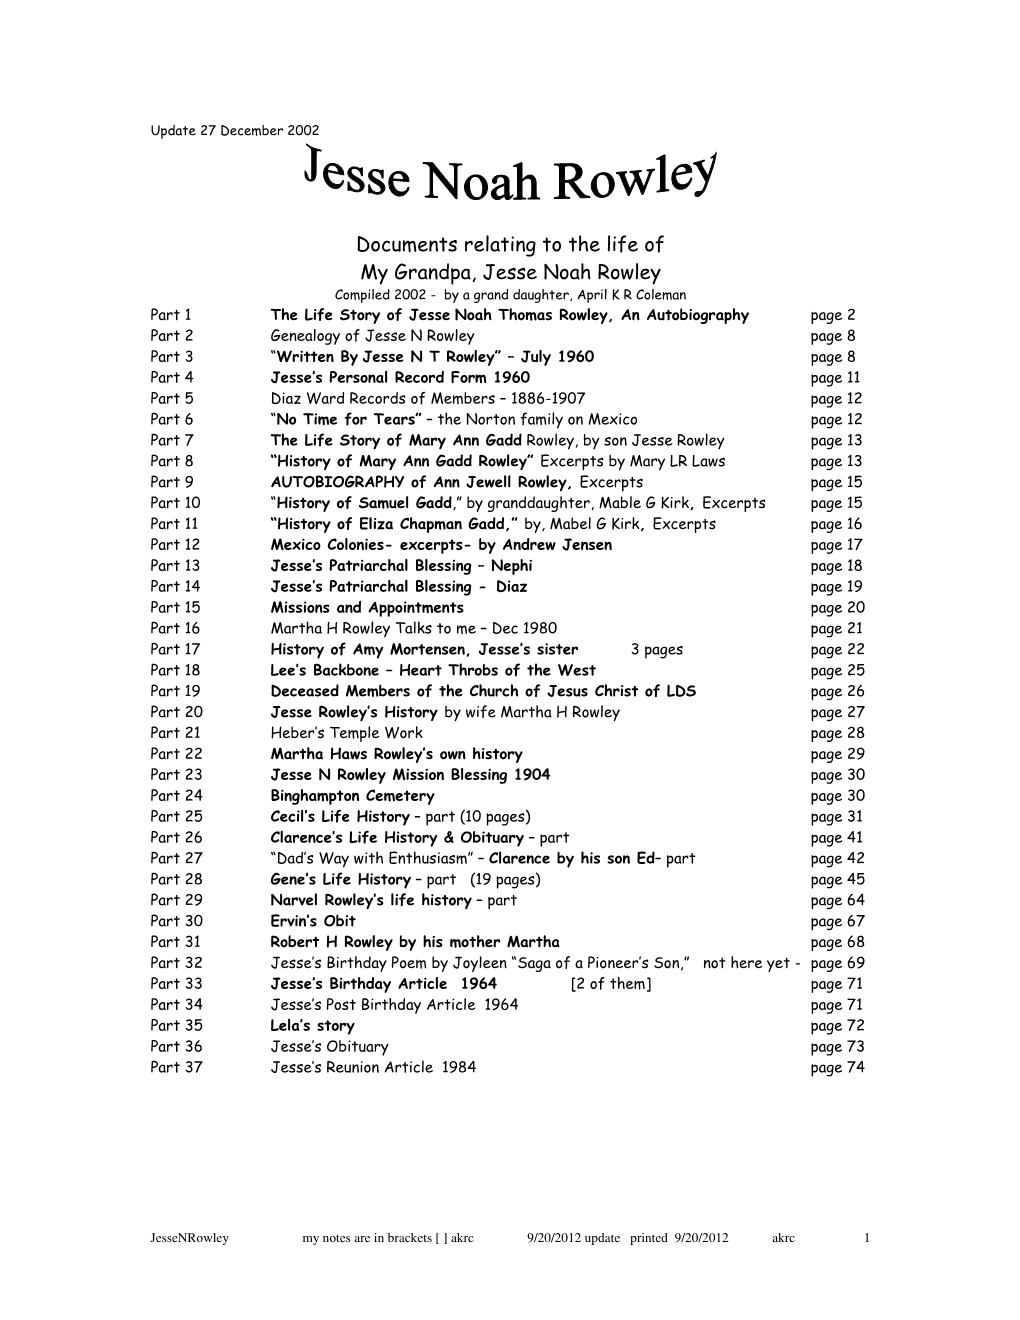 Jesse Noah Thomas Rowley